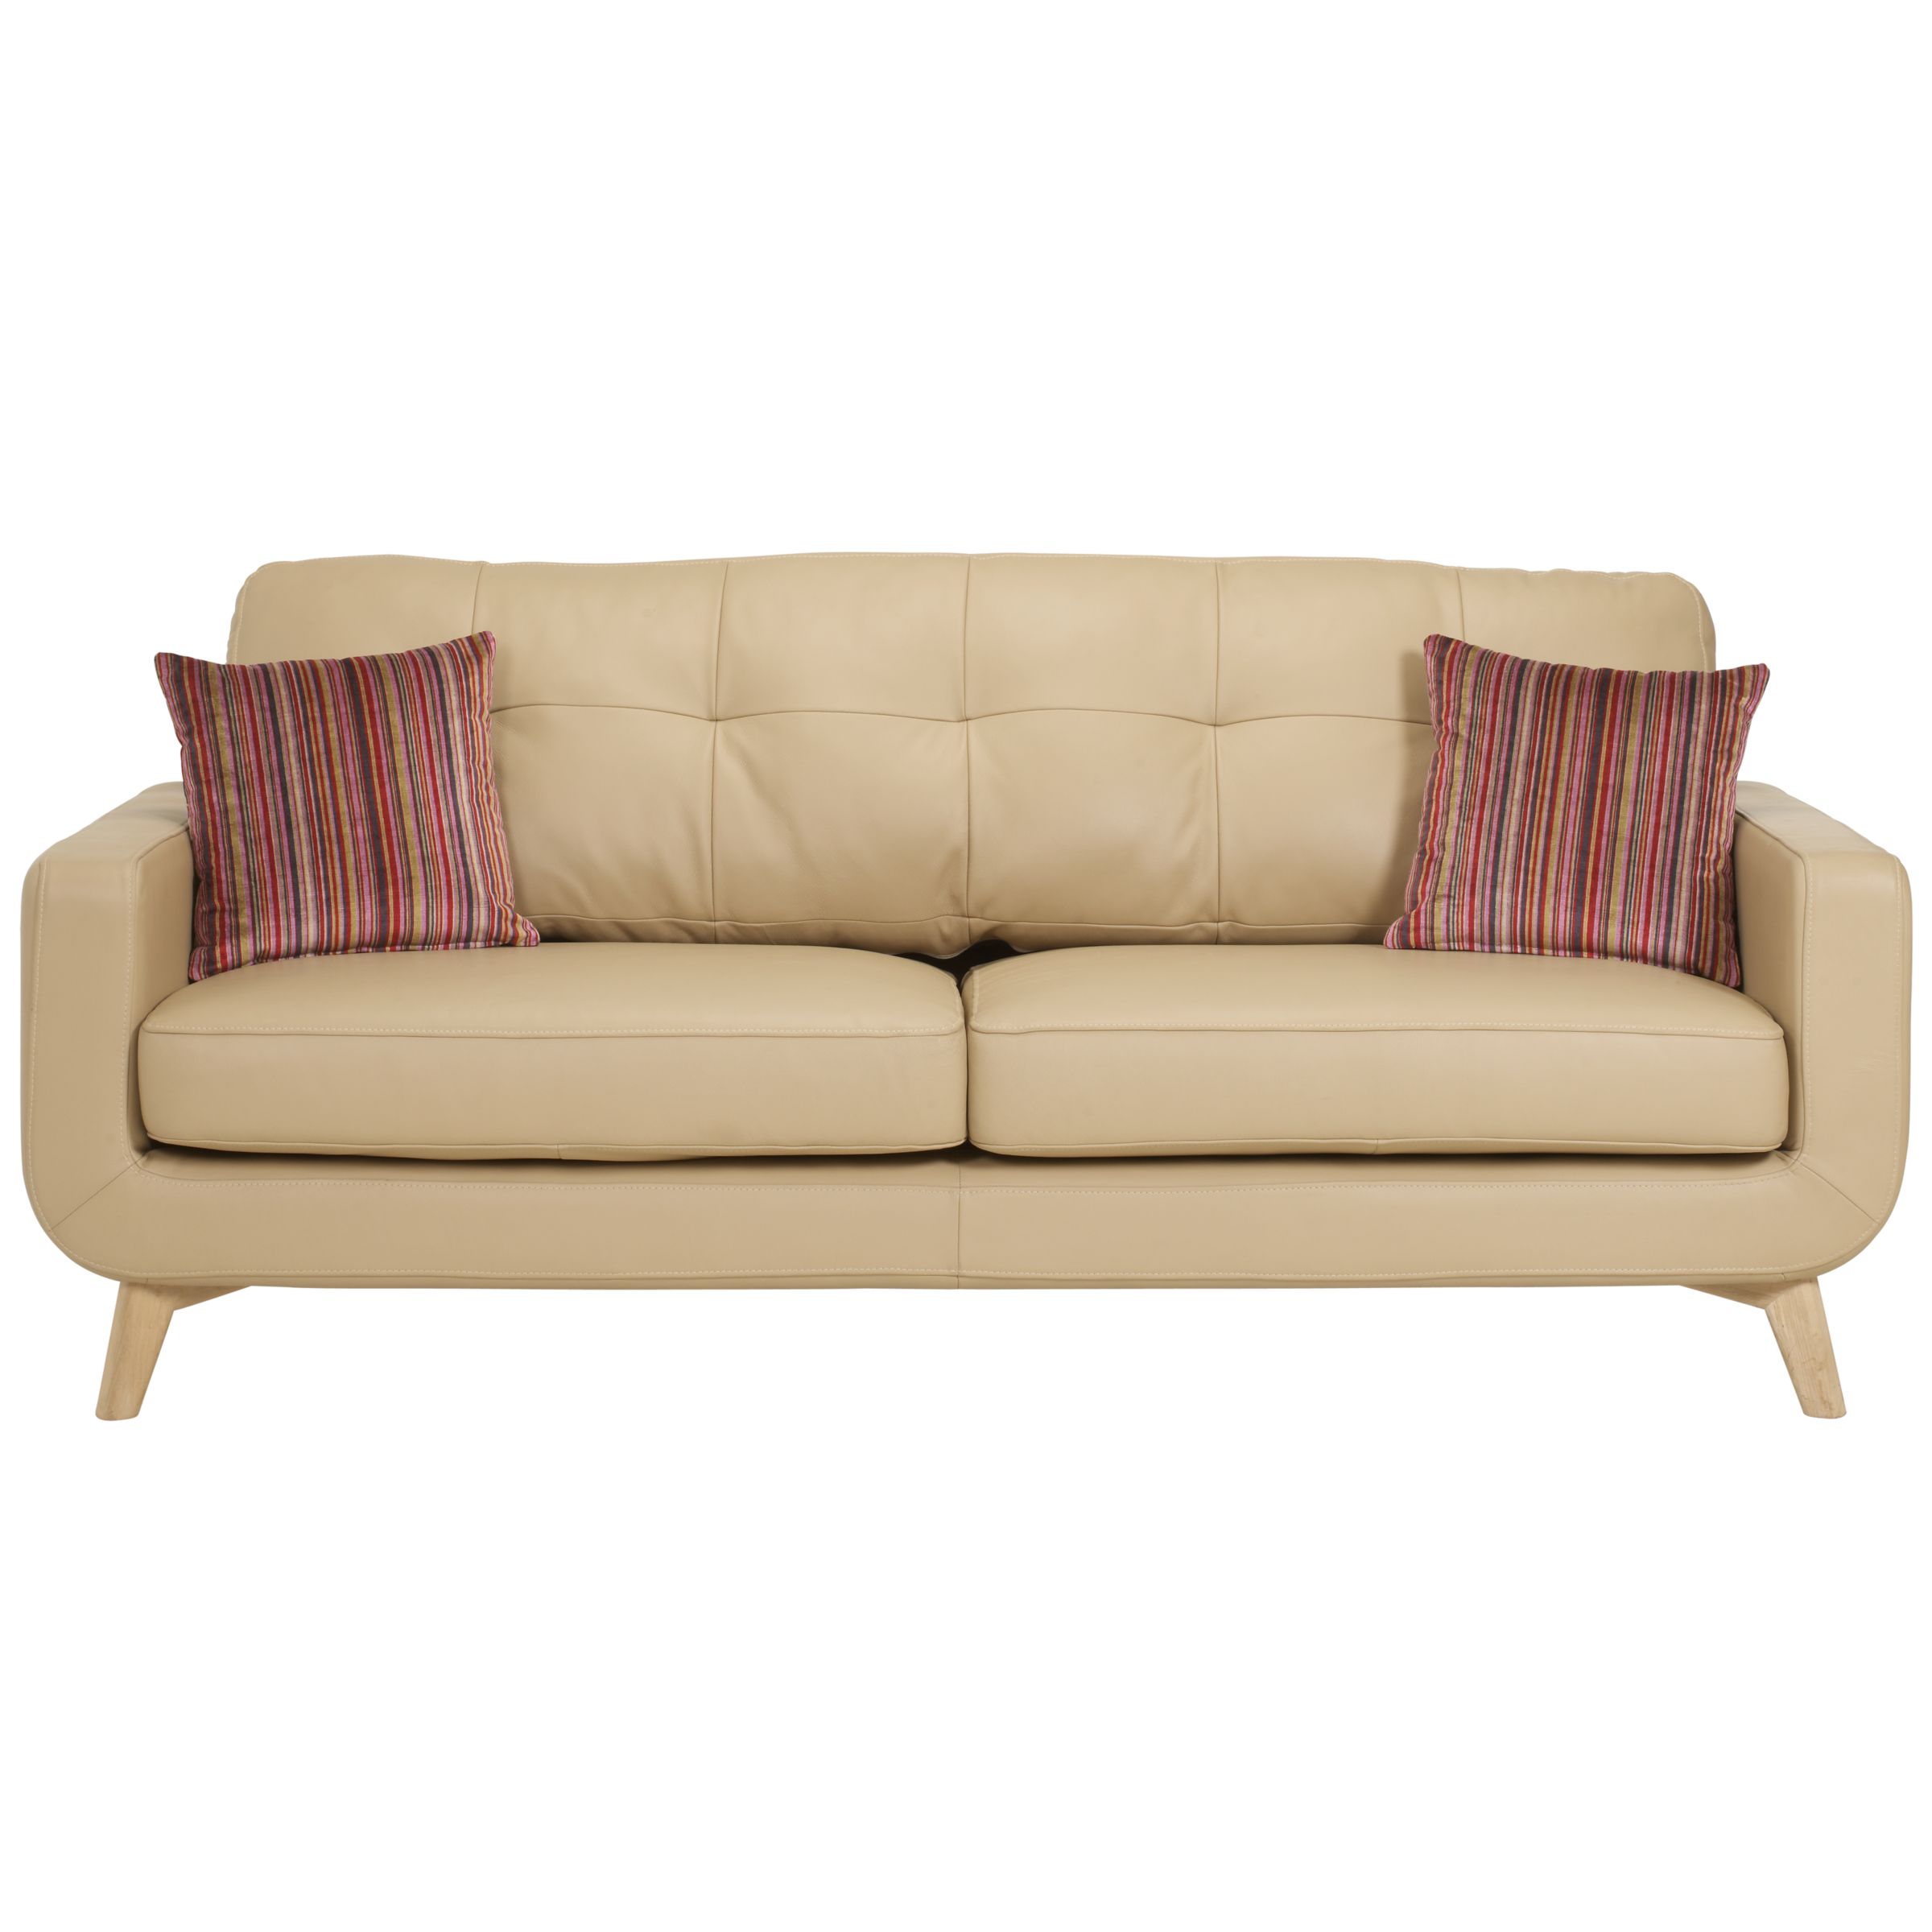 John Lewis Barbican Large Leather Sofa, Prescott Buckskin / Light Leg, width 206cm